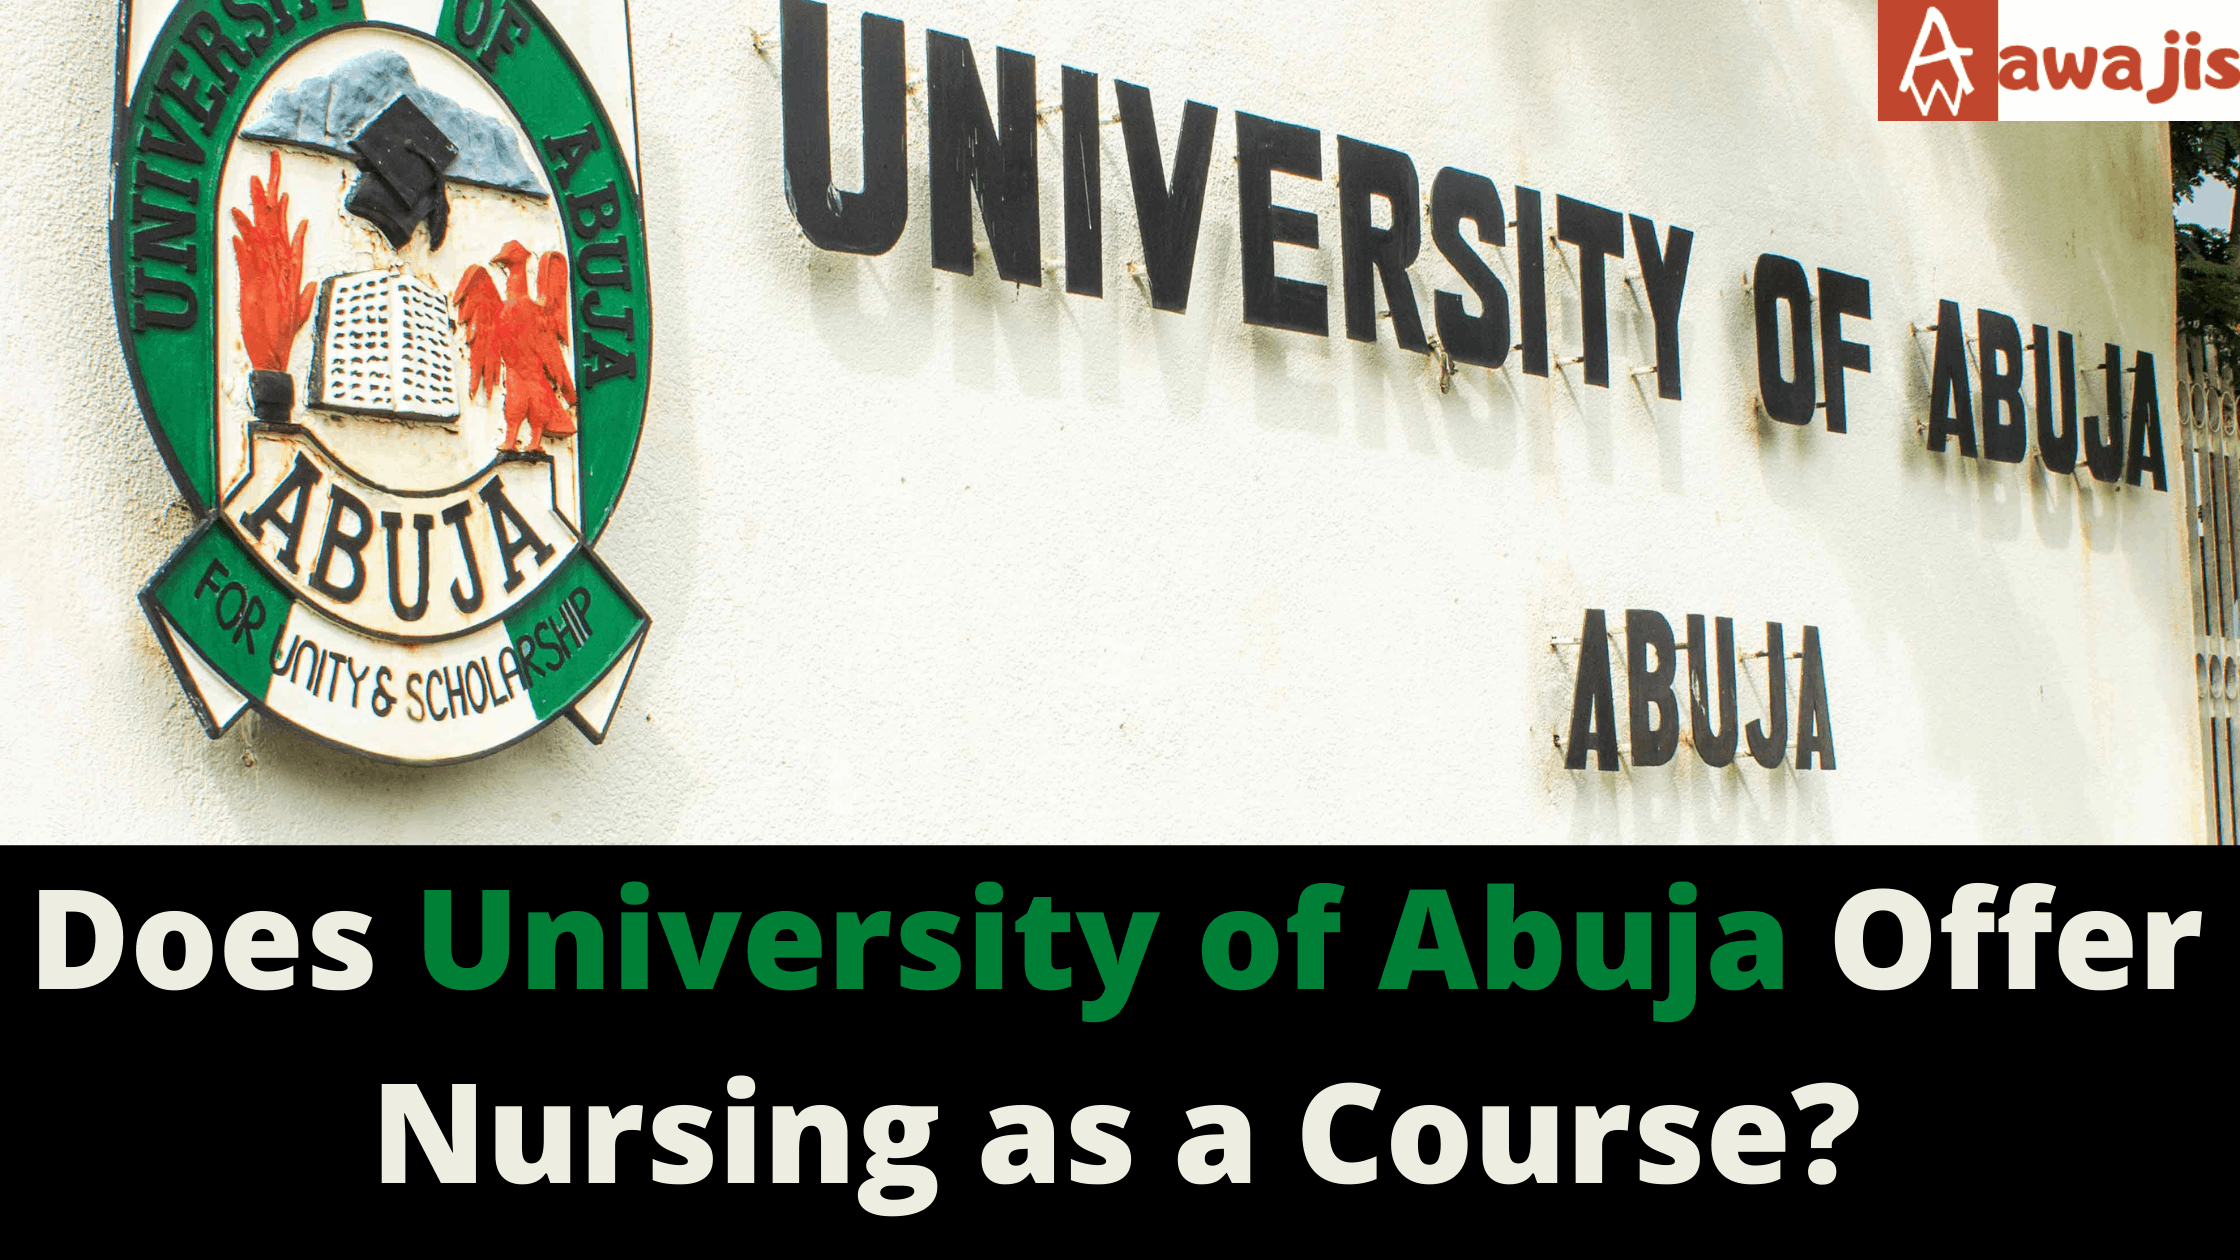 Does University of Abuja Offer Nursing?